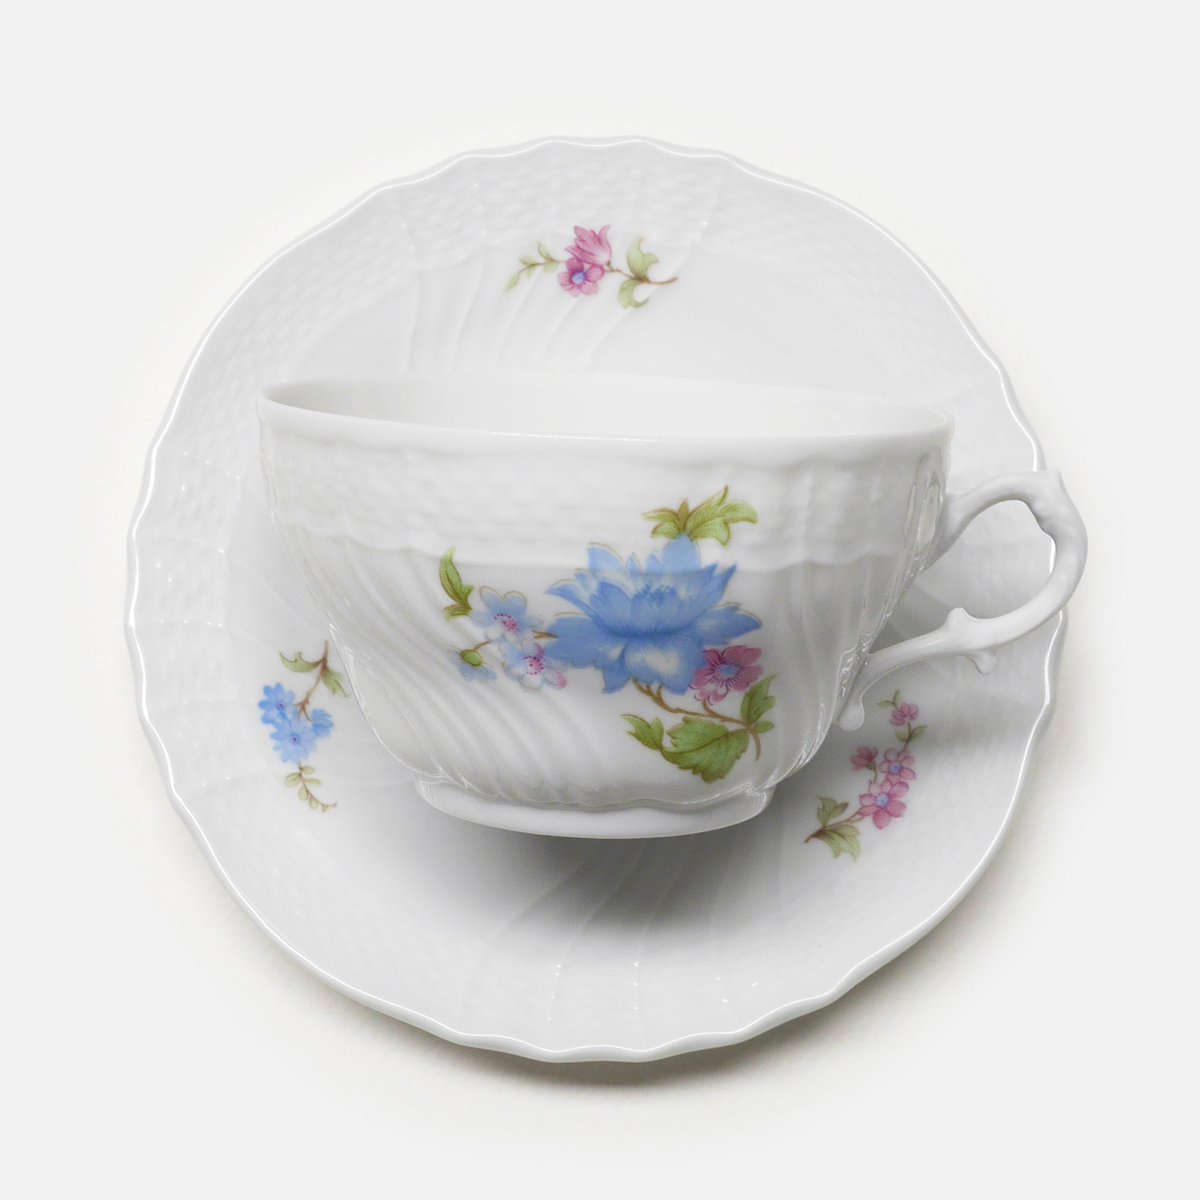 Richard Ginori Vecchio Bianco Floral Cup & Saucer Set.

판매가: 80,000원

구찌 산하의 이탈리아 도자기 브랜드 리차드 지노리에서 생산한 베끼오 비앙코 플로럴 패턴.

주름 장식으로 입체감을 살린 베끼오(Vecchio)에 푸른 꽃무늬 장식이 추가된 베리에이션 제품입니다.
smartstore.naver.com/the-zan/produc…